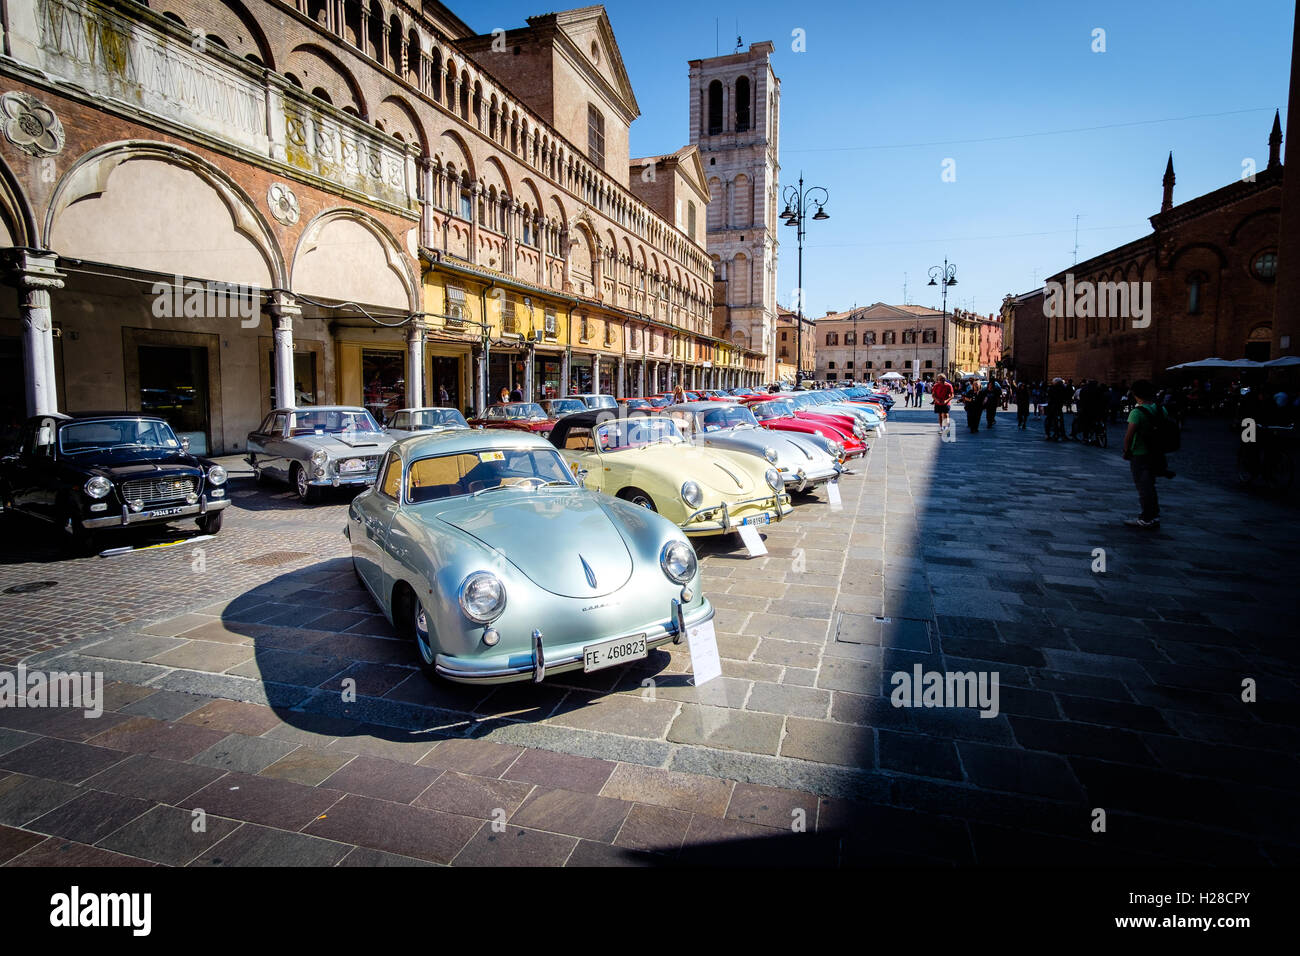 Ferrara, Italy -September 24, 2016. Exhibition of historical vehicles in the square of the city of Ferrara, Italy Stock Photo